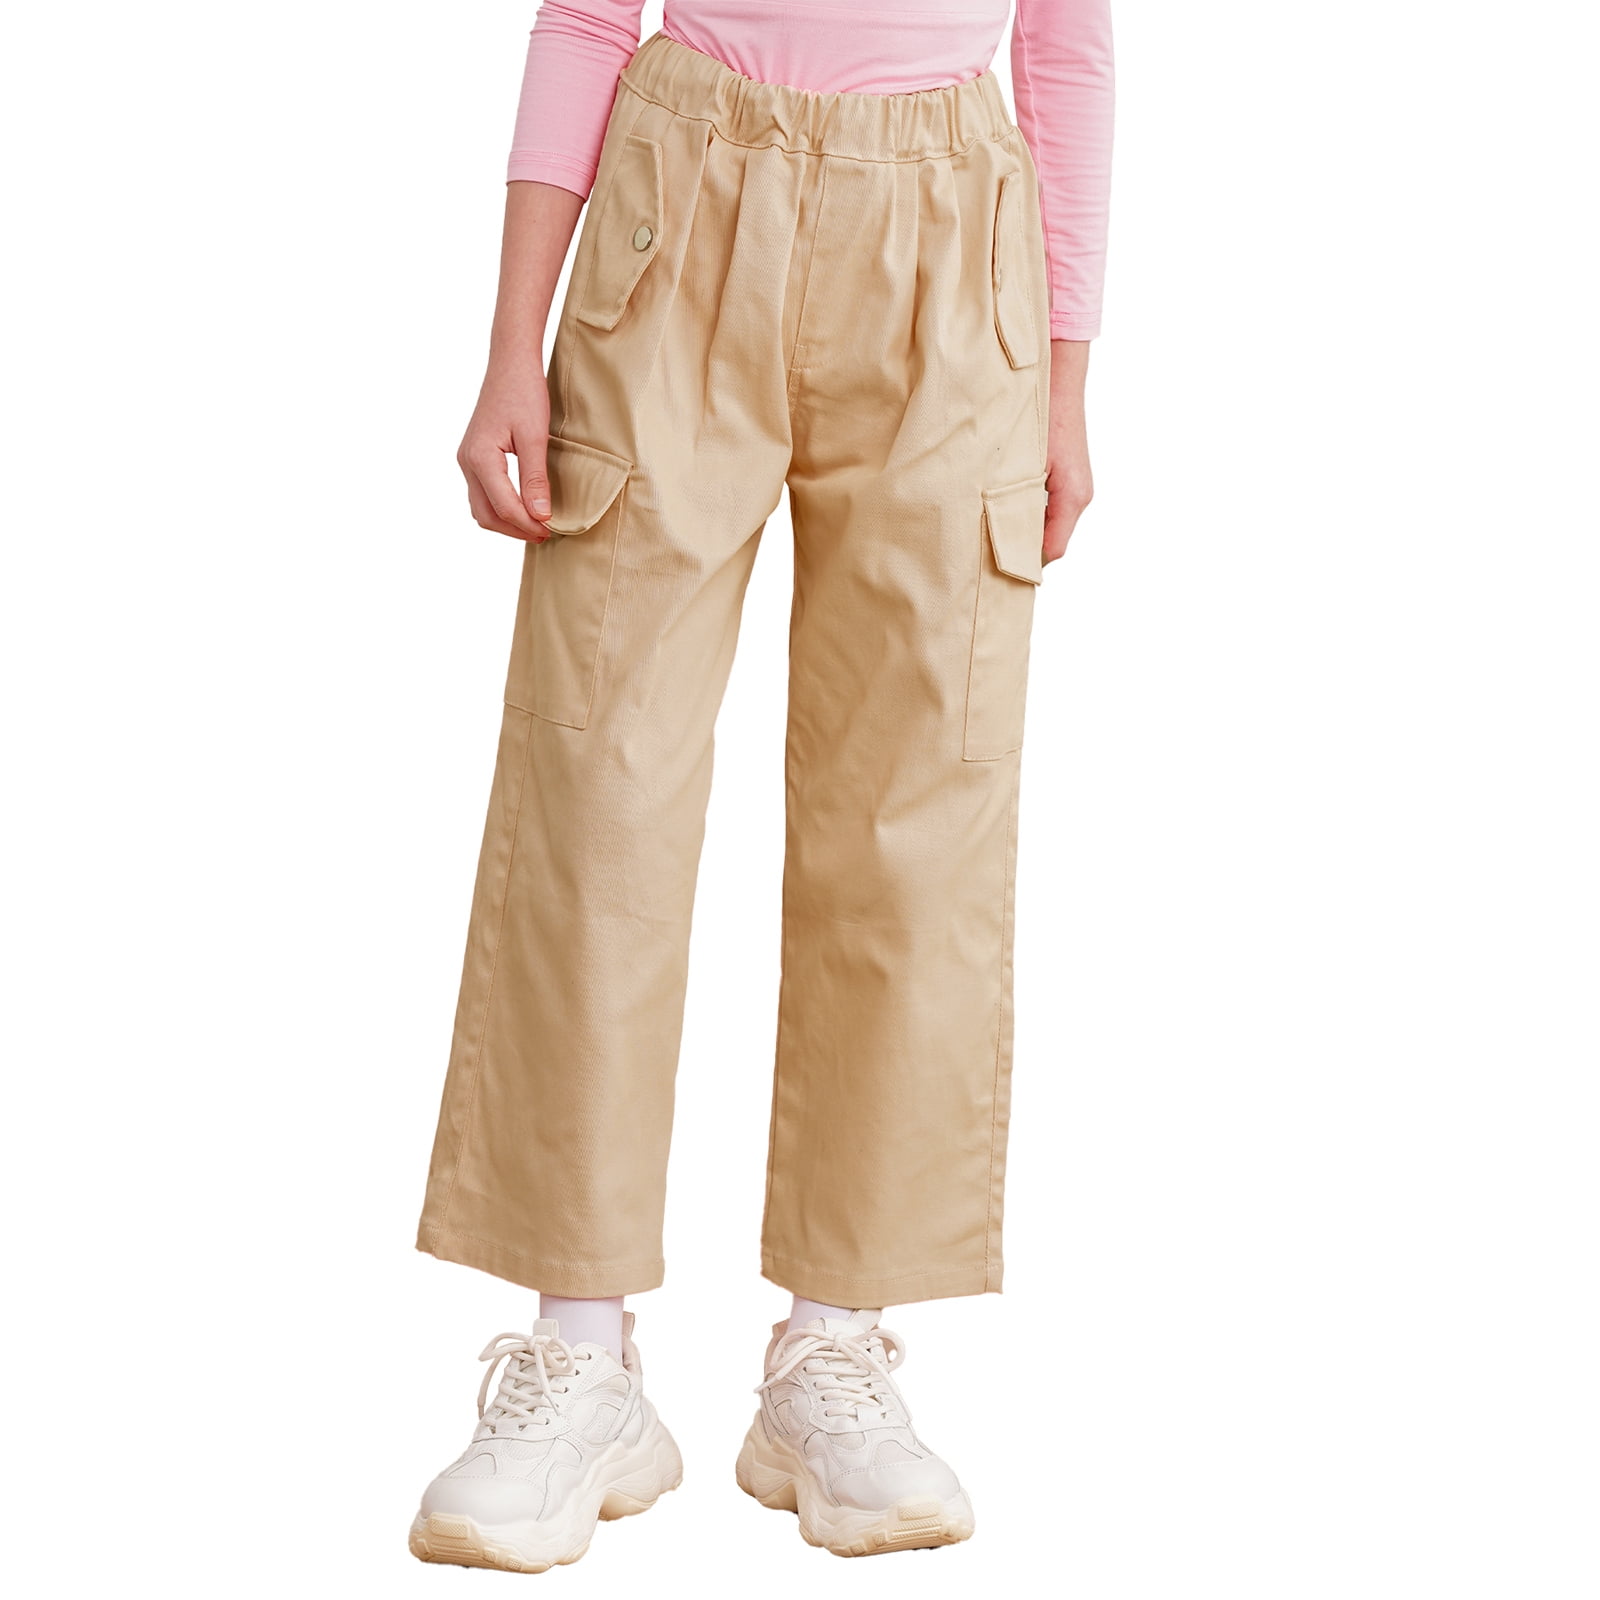 CHICTRY Girls Casual Jogger Cargo Pants Loose Fit Big Pockets Hip Hop Dance  Pants Sweatpants Khaki 14